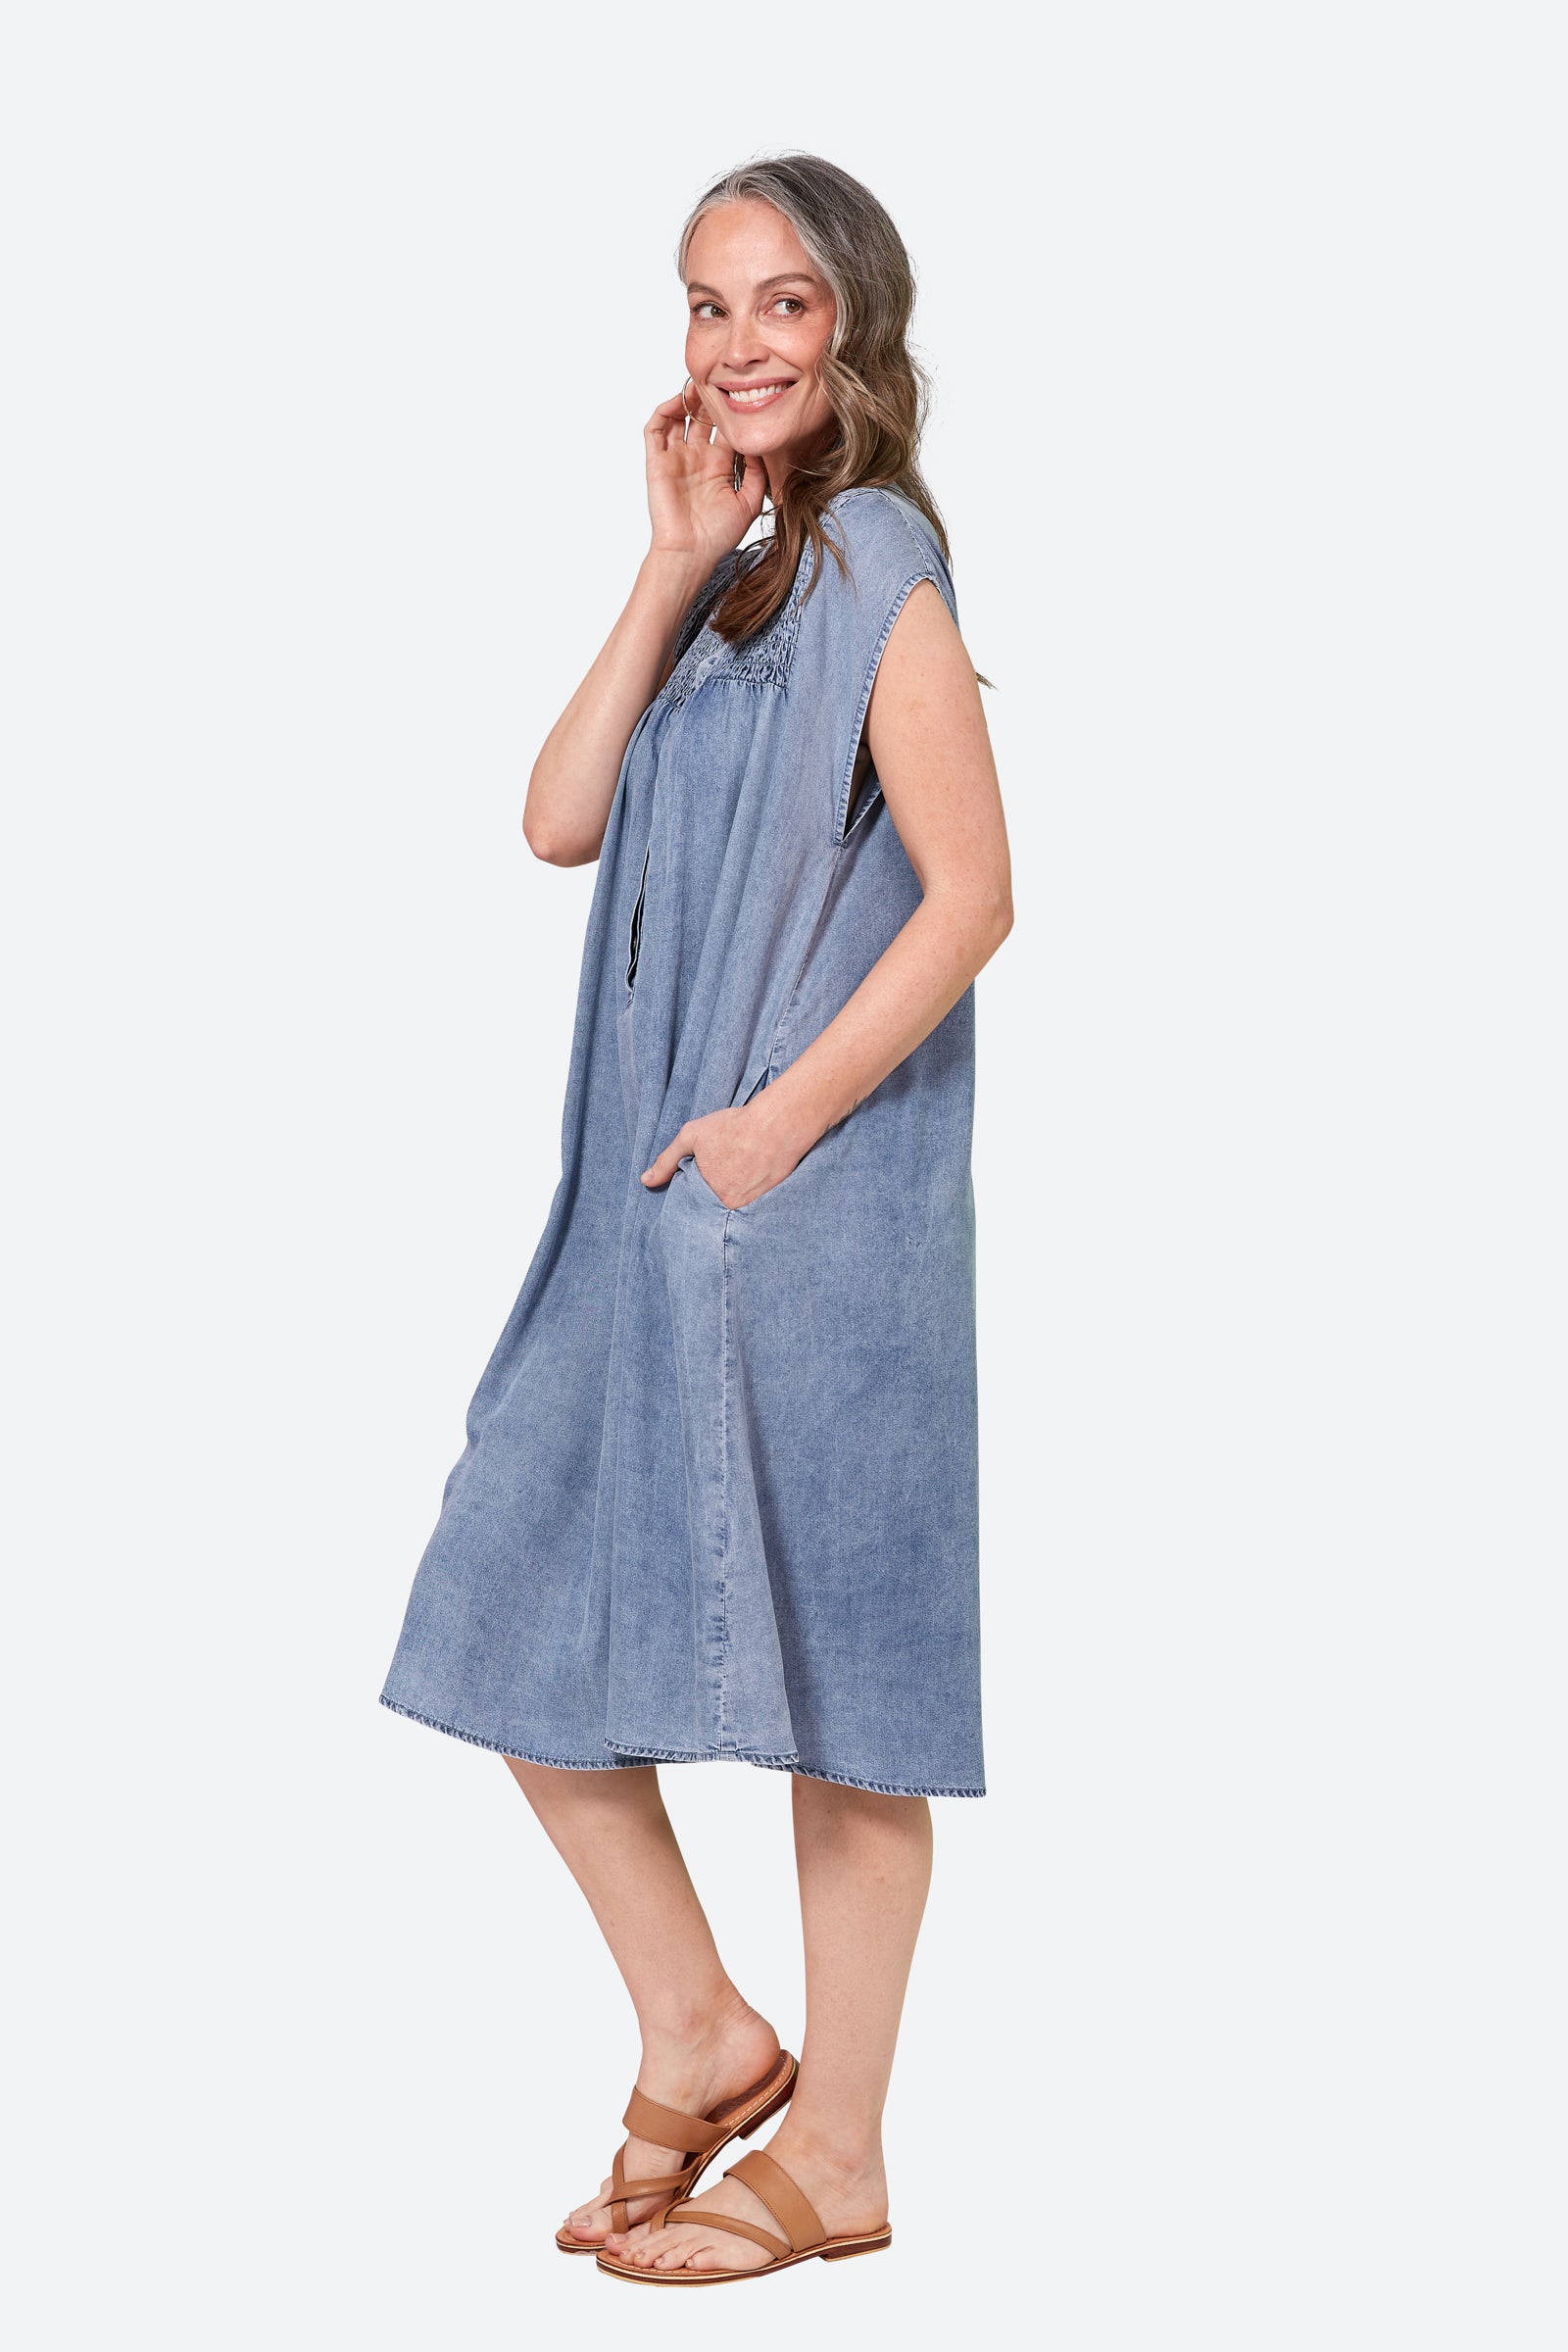 Elan Dress - Denim - eb&ive Clothing - Dress Mid